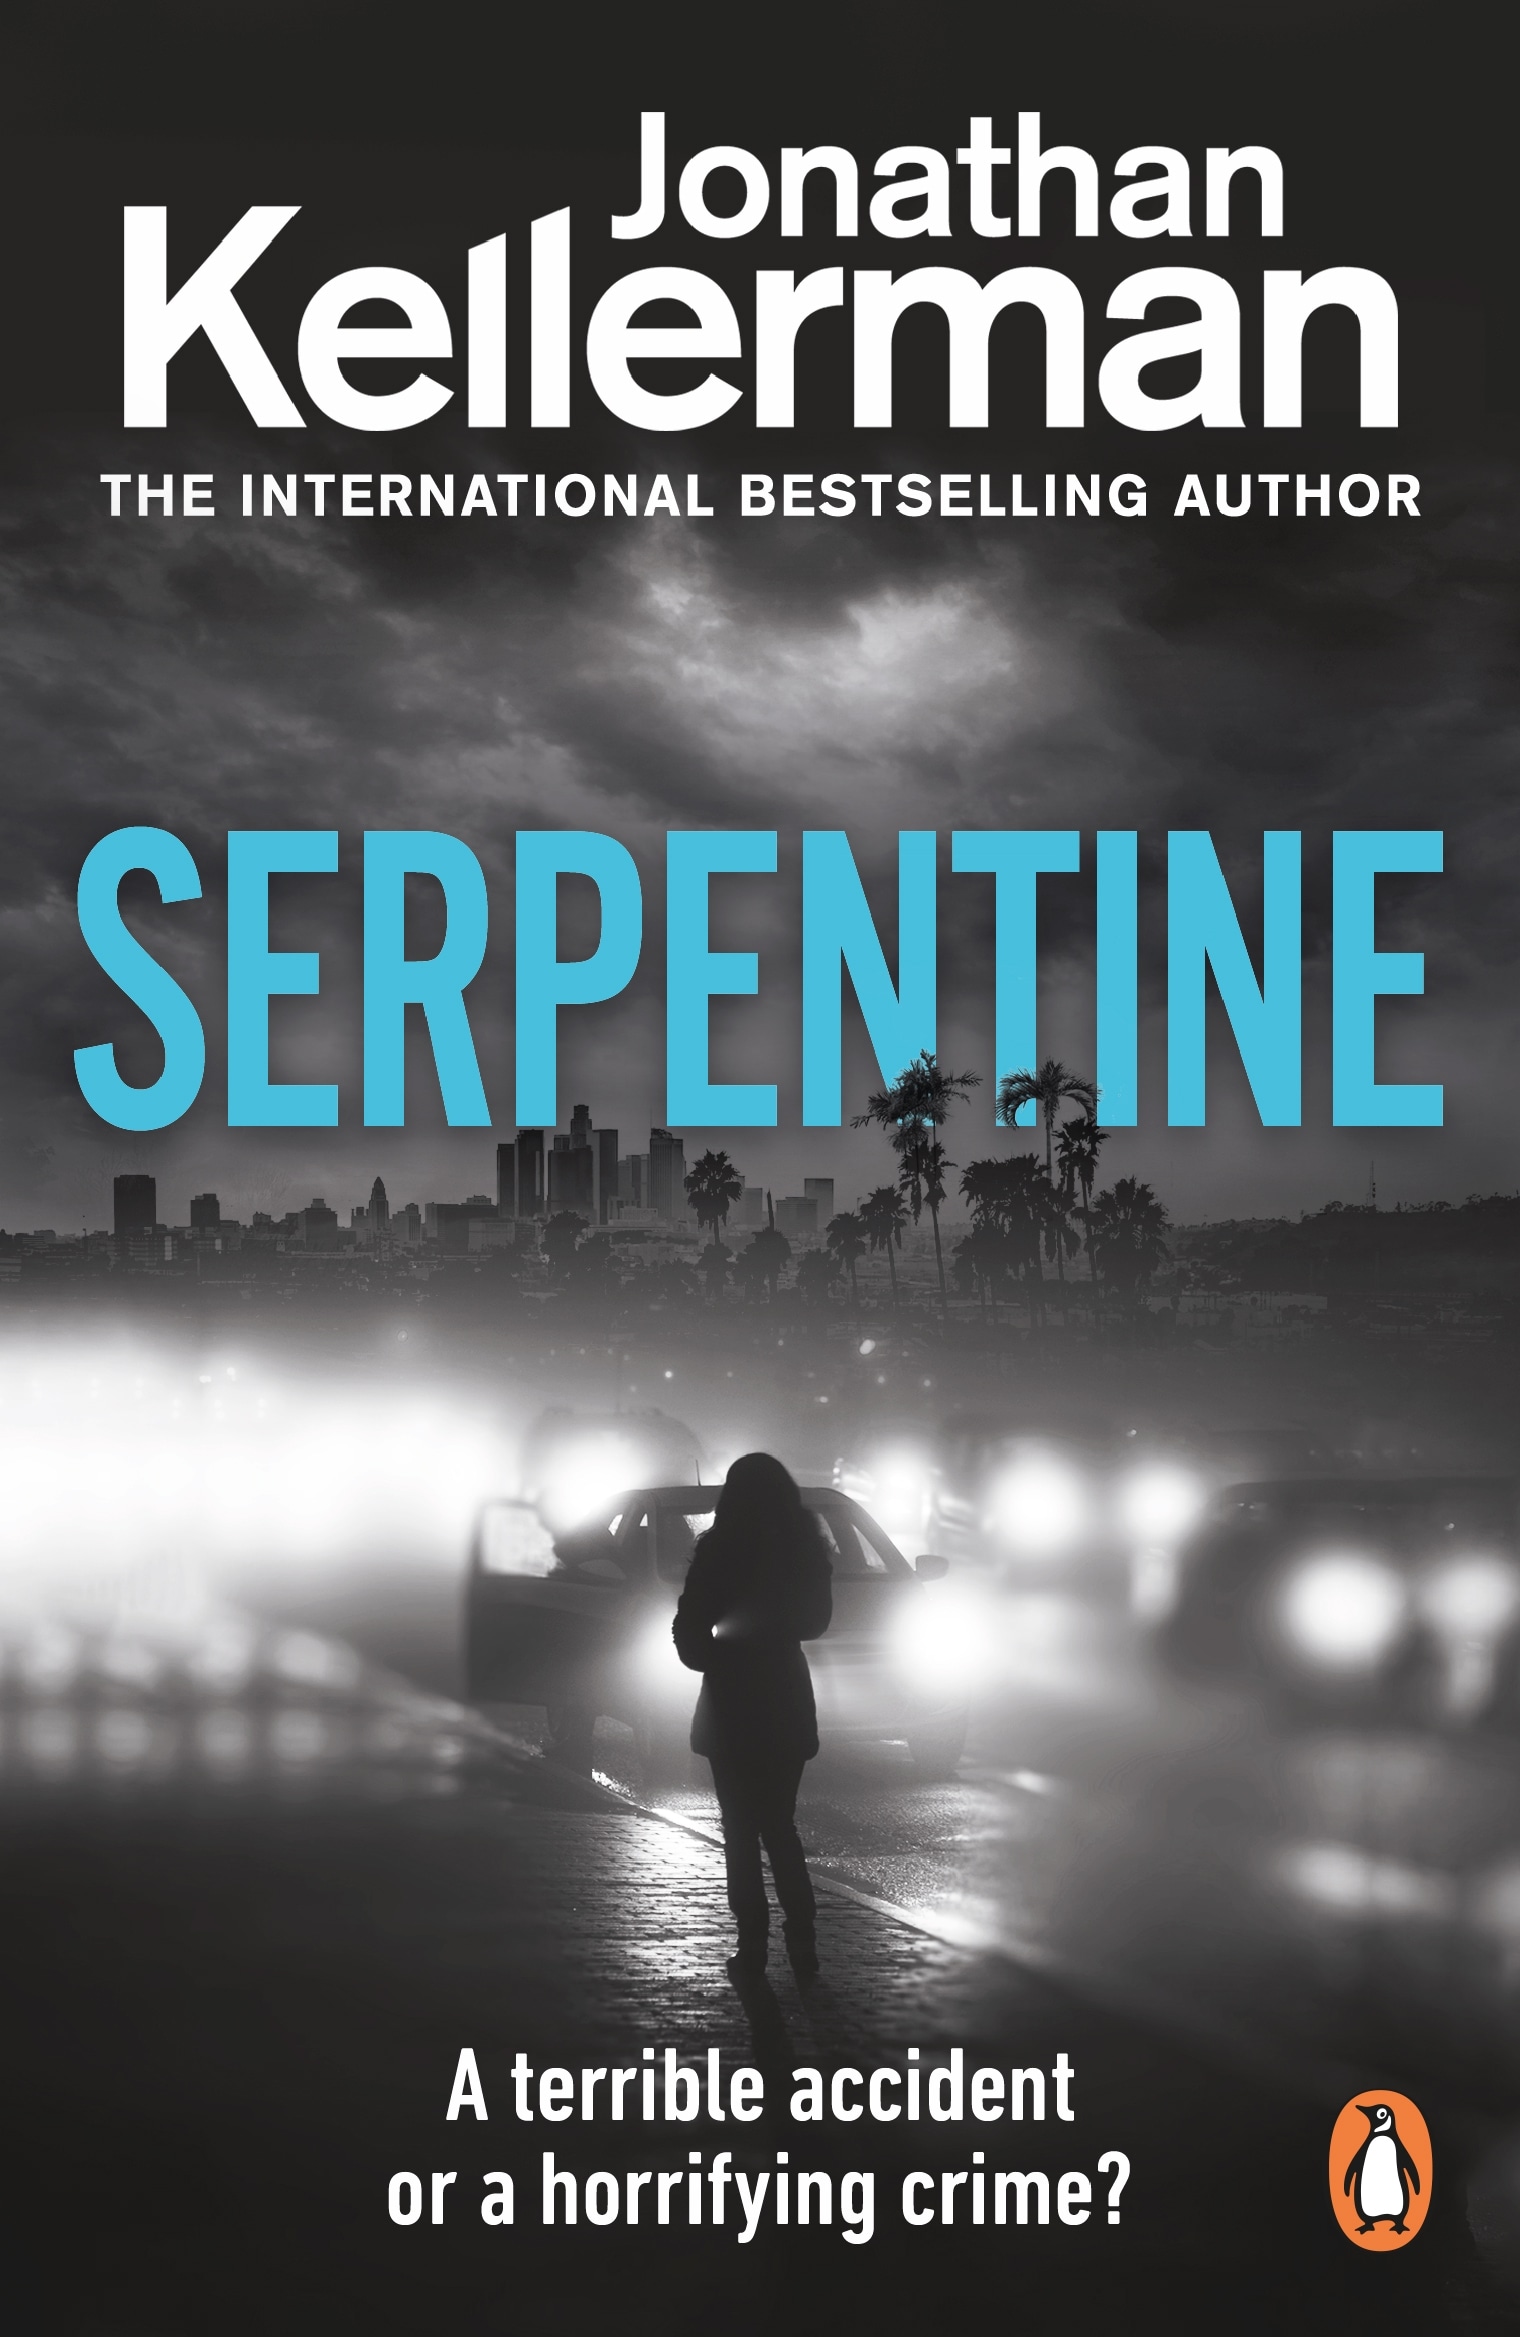 Book “Serpentine” by Jonathan Kellerman — November 23, 2021